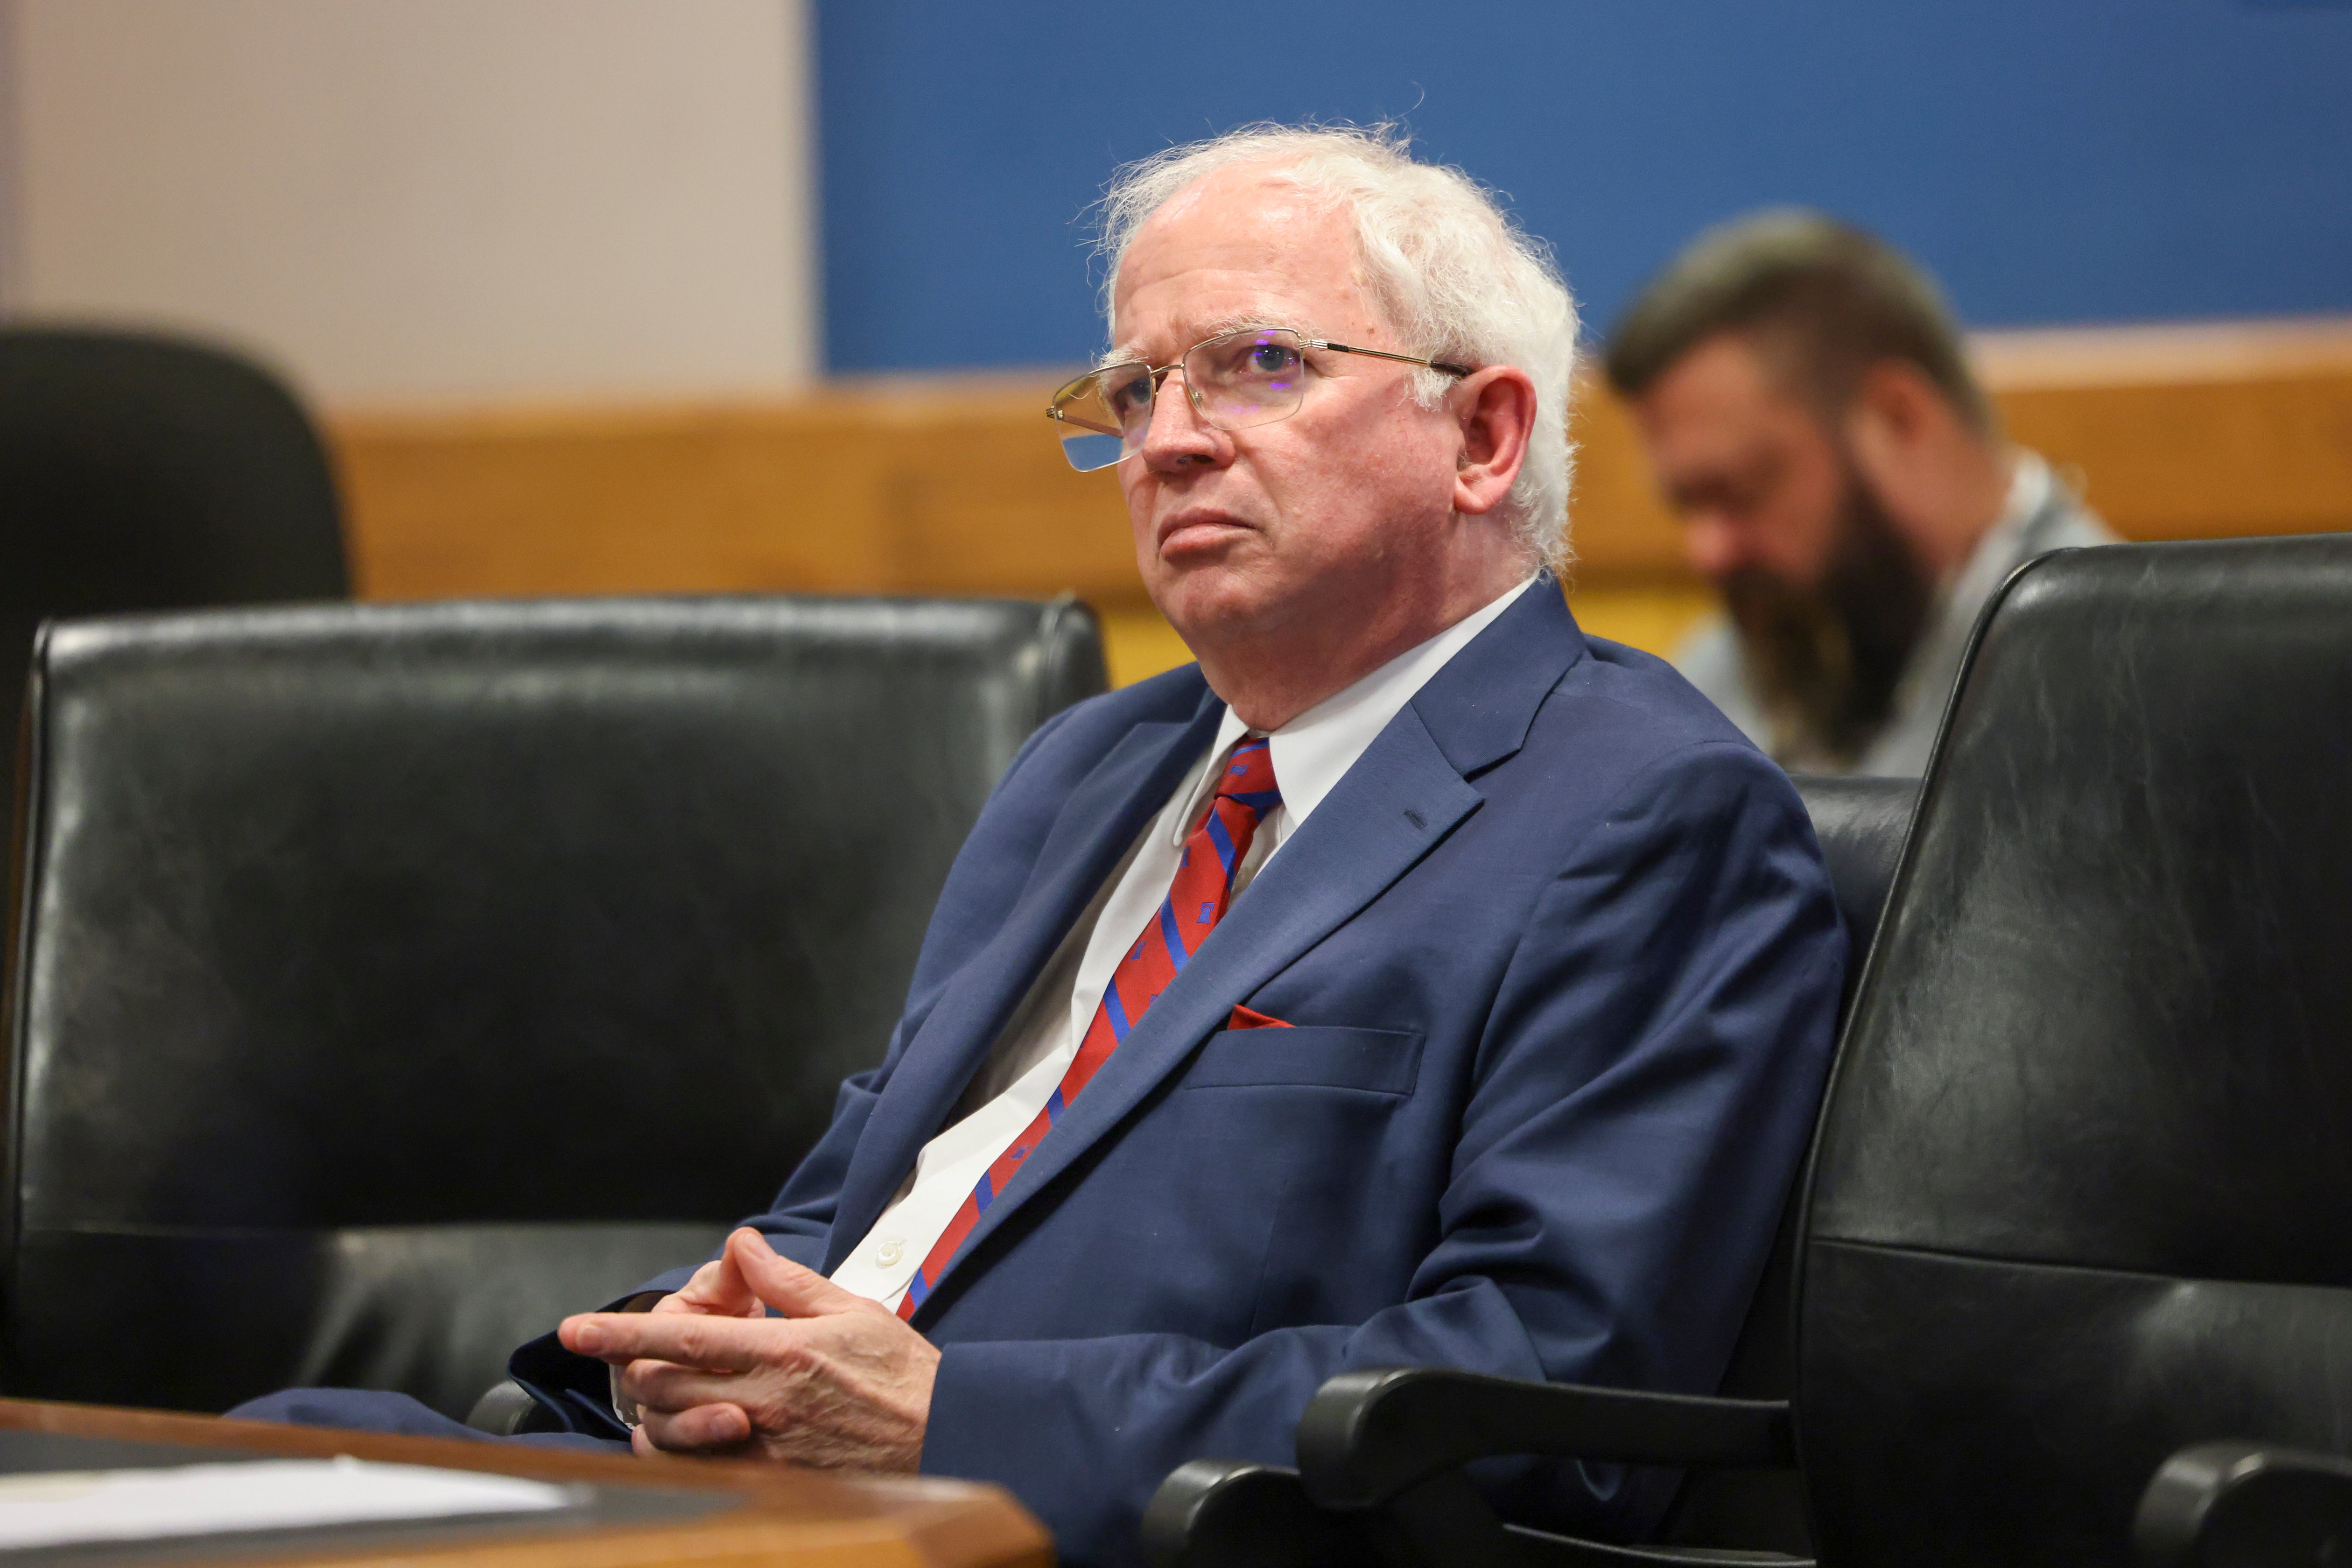 John Eastman sits in Fulton Superior Court in Atlanta during a hearing on January 19, 2023 in Atlanta, Georgia